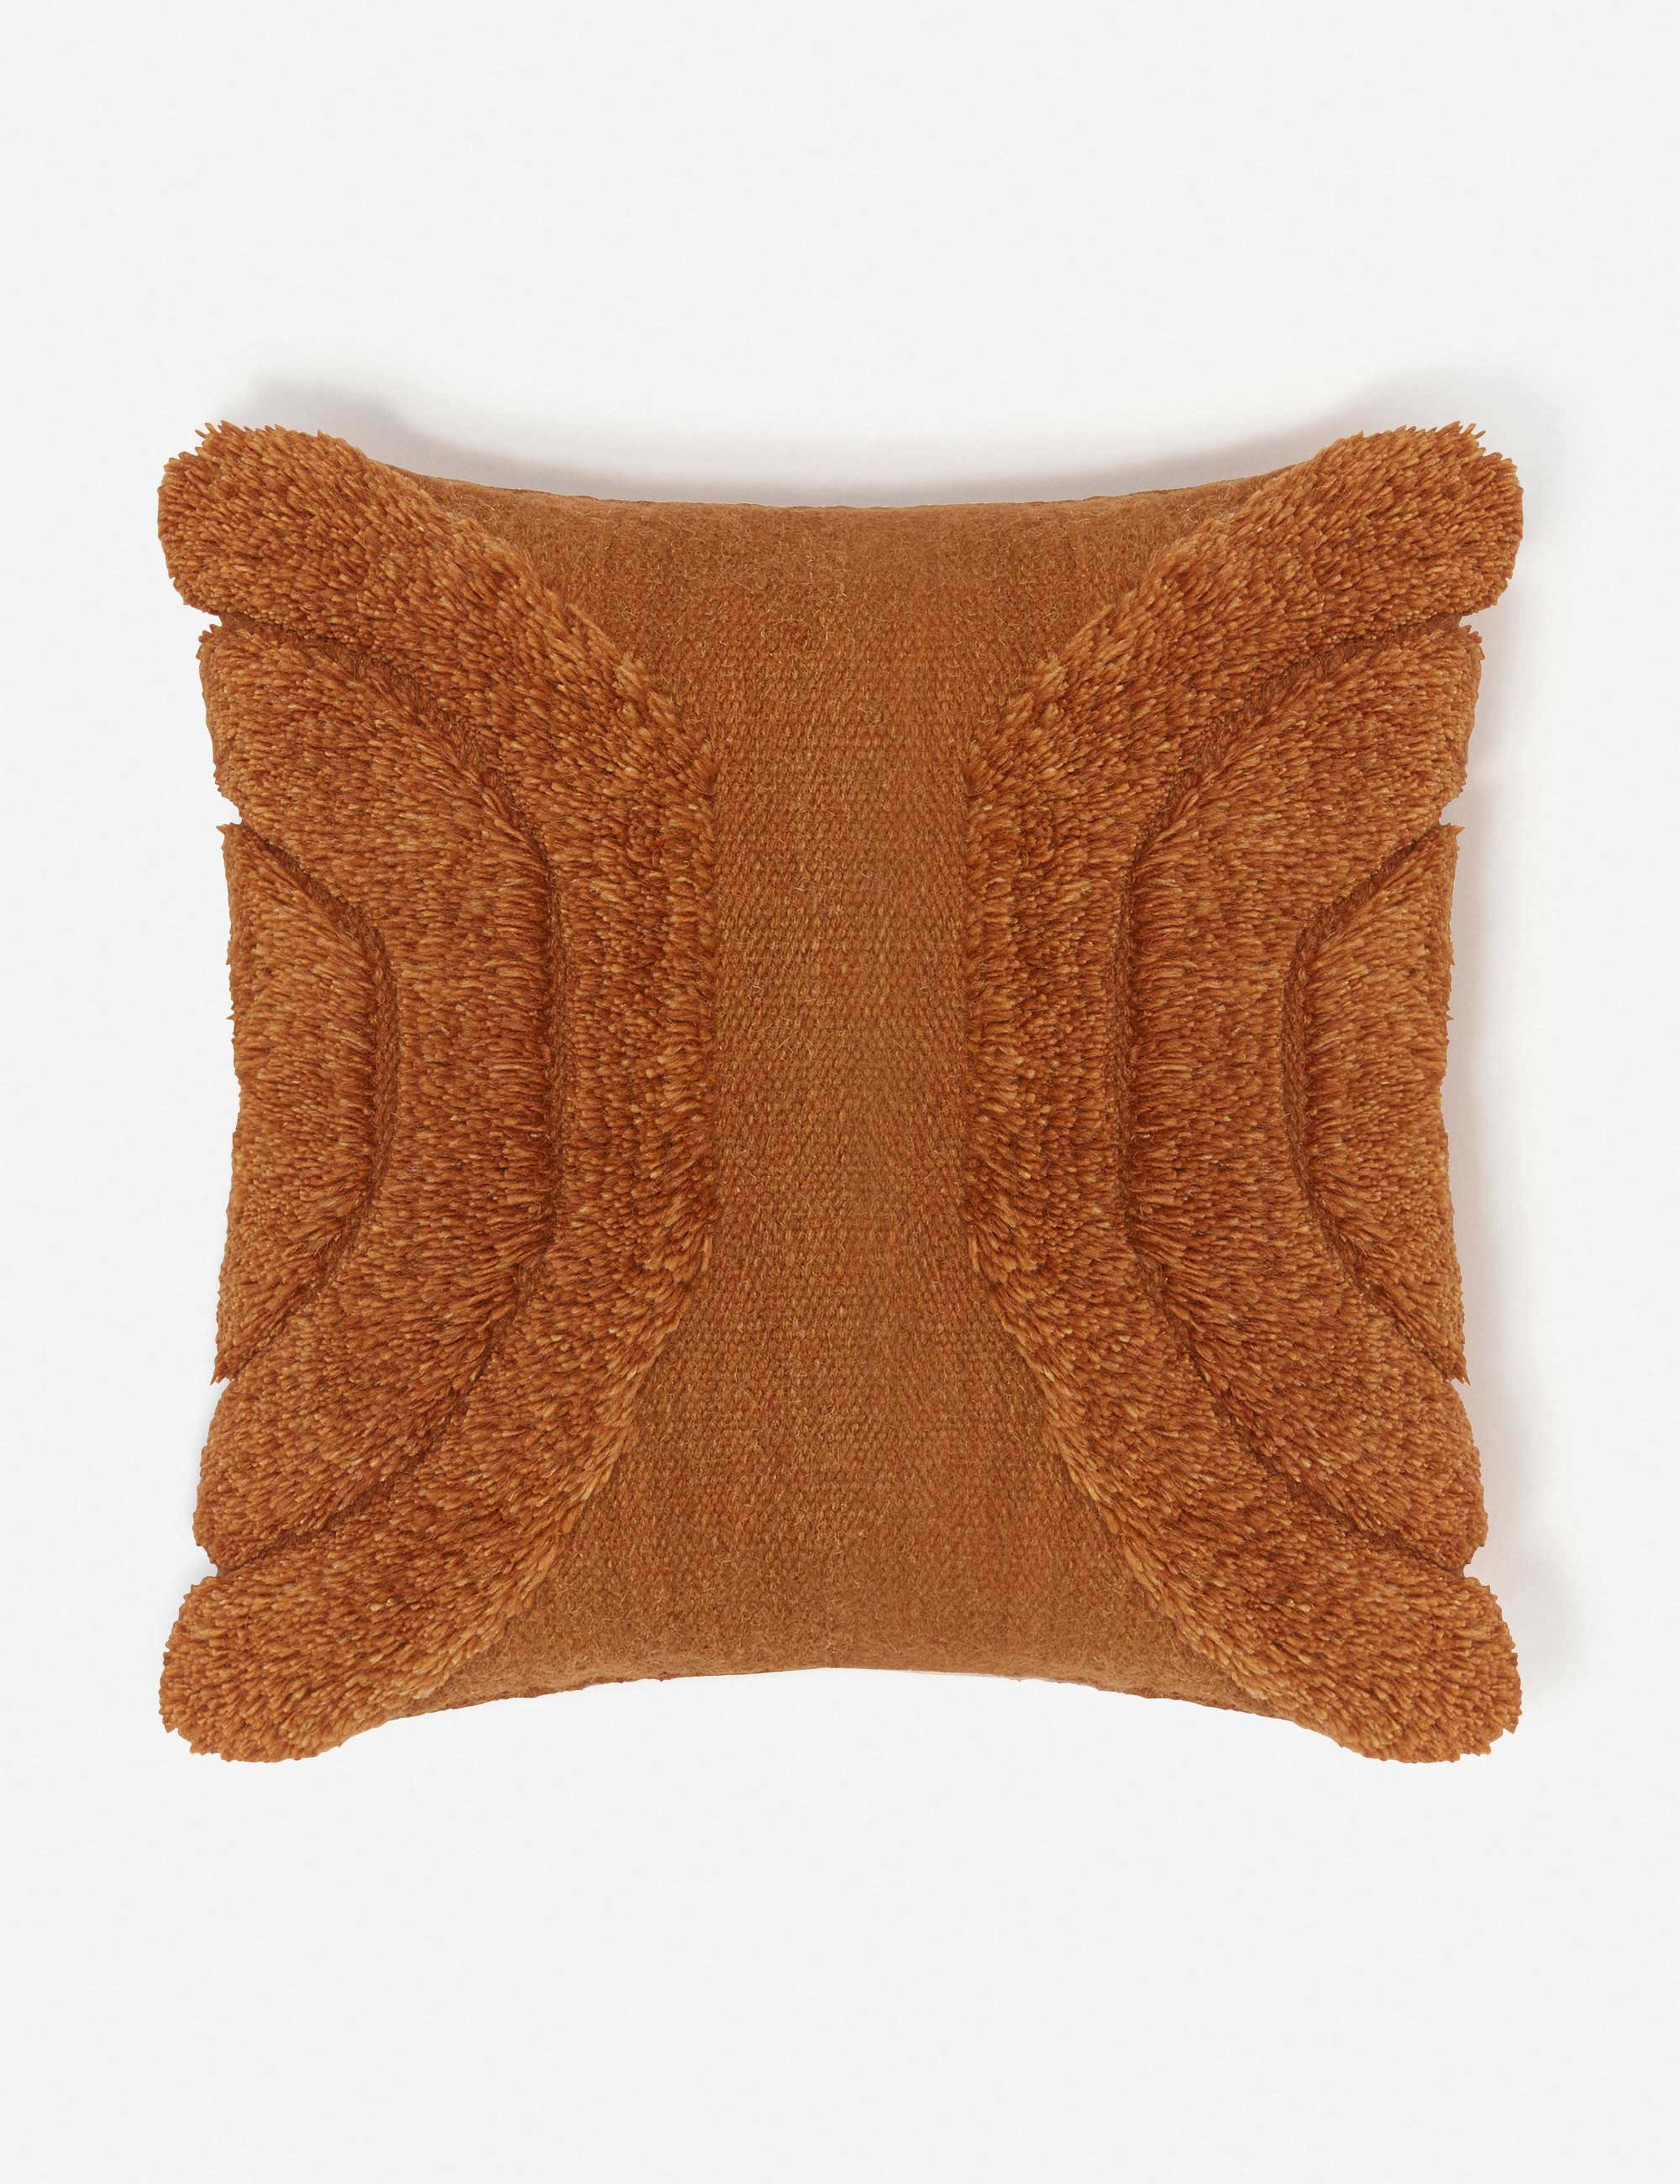 Arches Pillow, Rust By Sarah Sherman Samuel - Lulu and Georgia